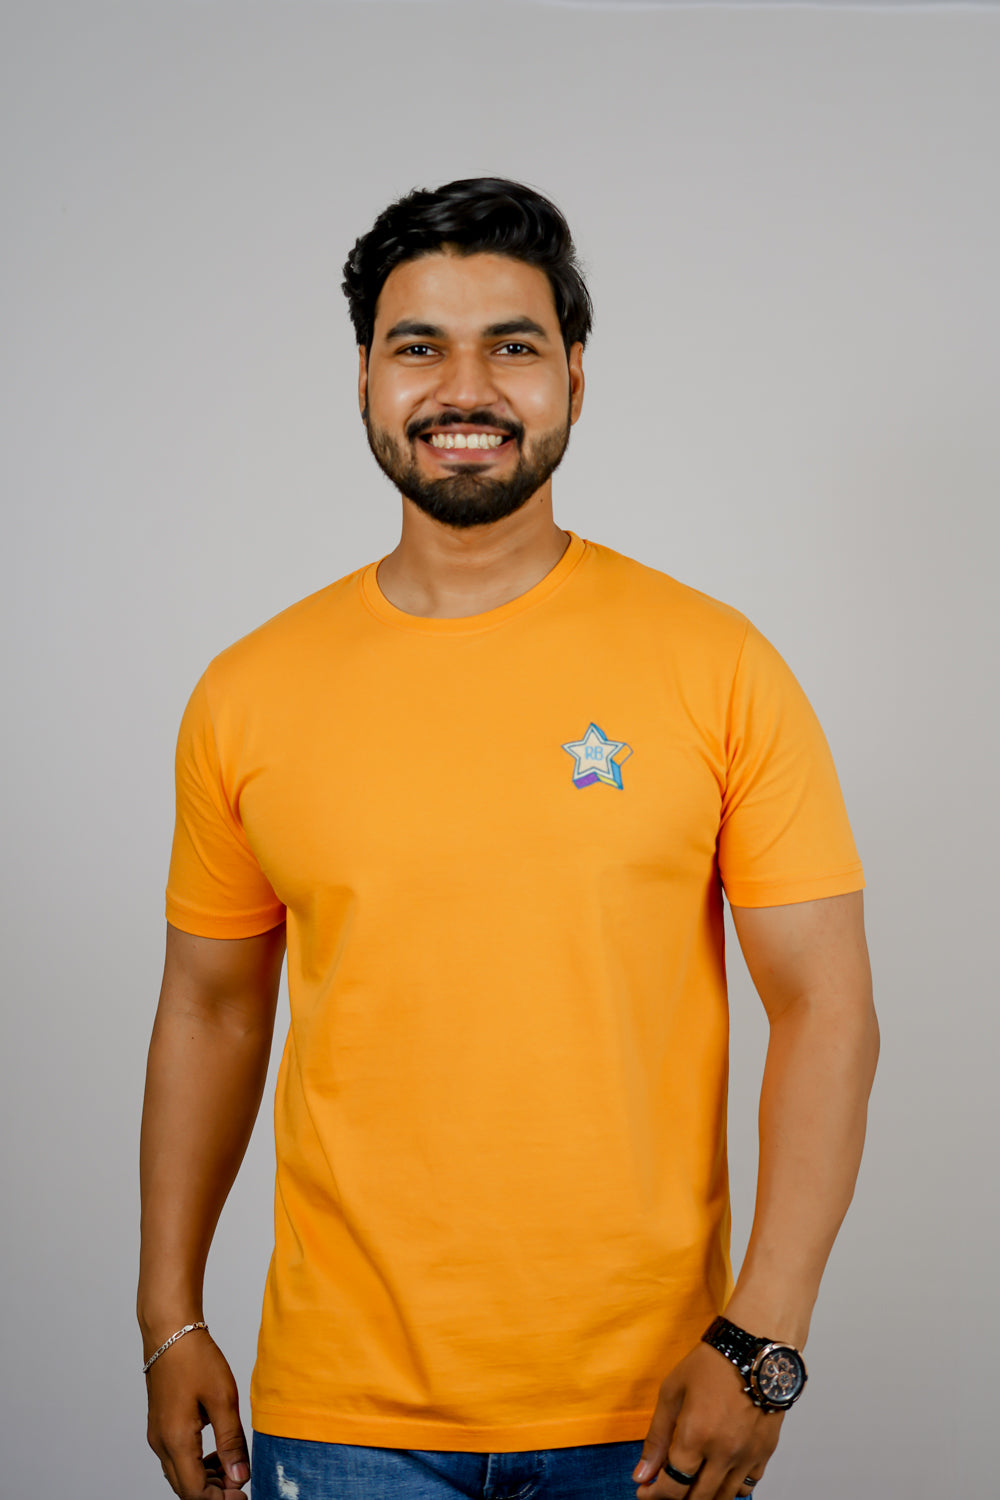 Rarebond's EMB Yellow Half Sleeve Comfort Fit T-shirt